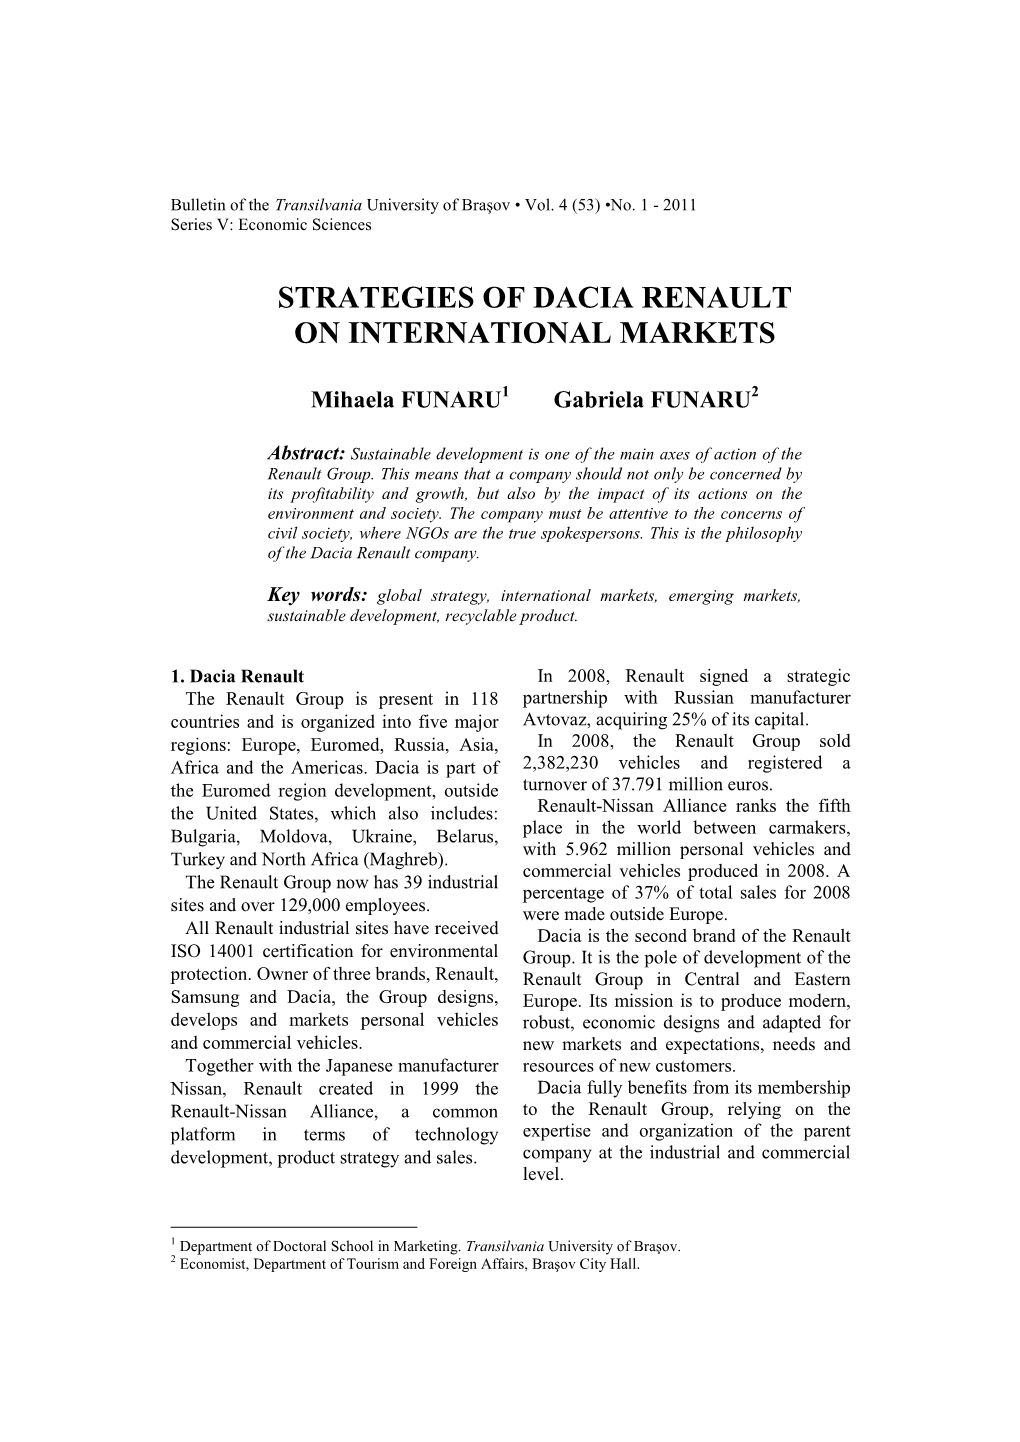 Strategies of Dacia Renault on International Markets